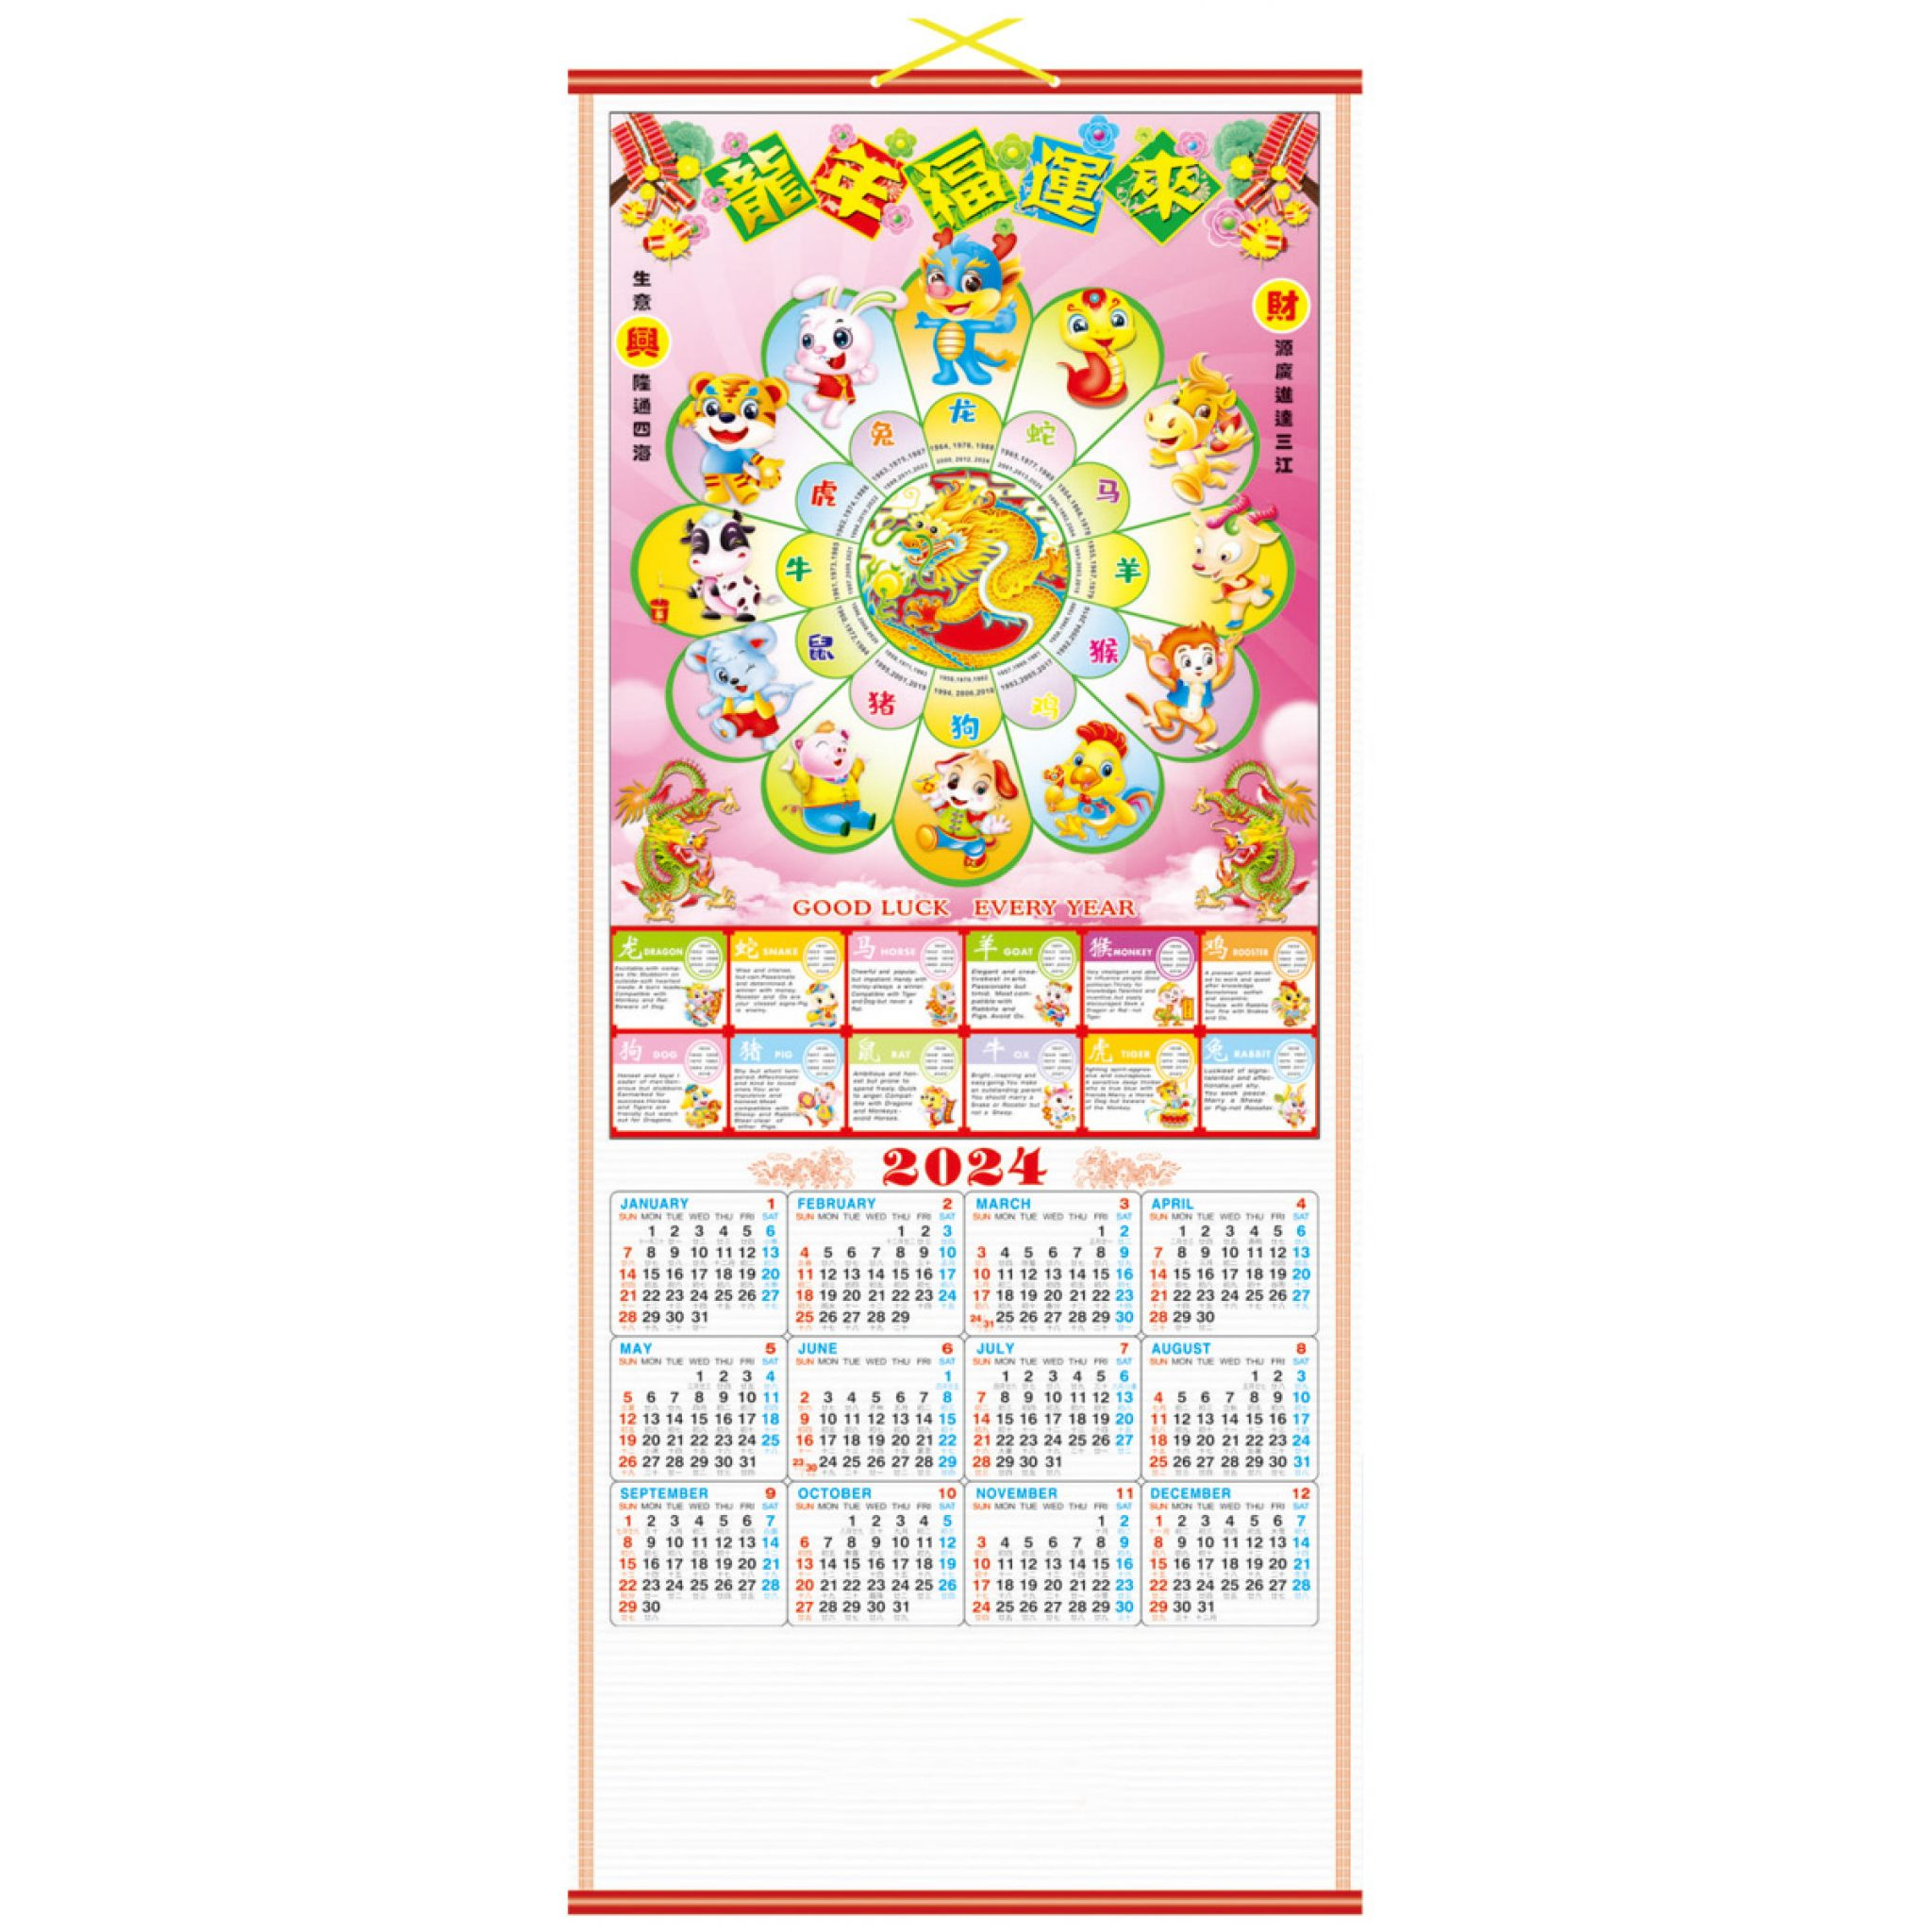 2024 Zodiac Calendar intended for July 4 Chinese Calendar 2024